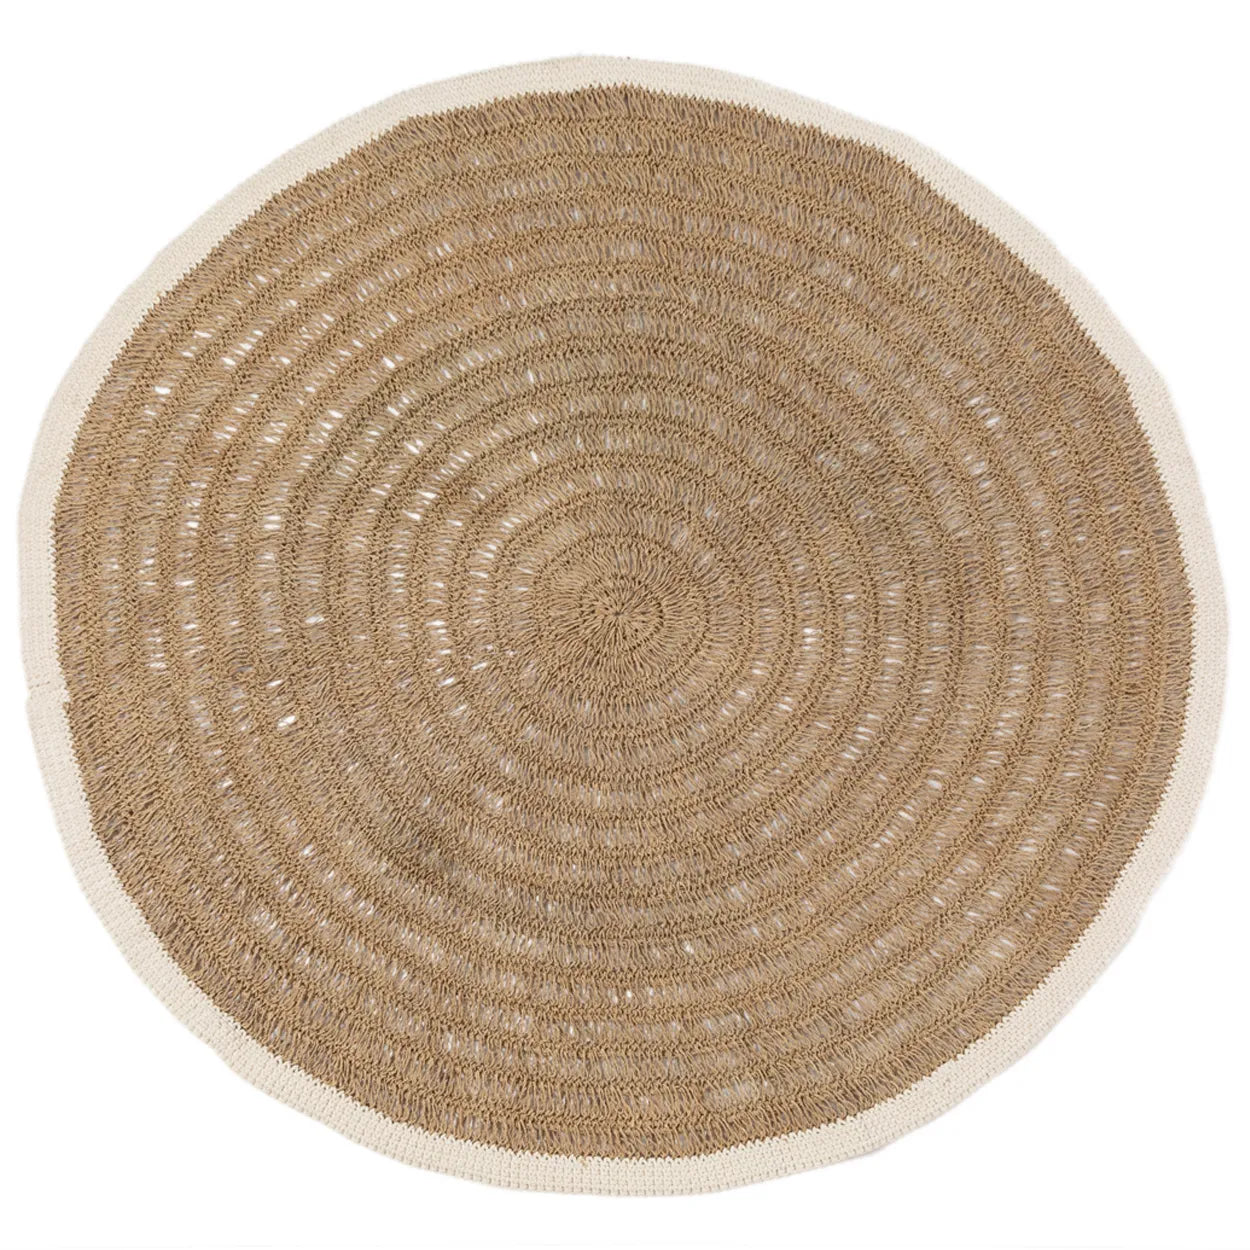 Montserrat Seagrass Carpet - Seagrass & Cotton Carpet